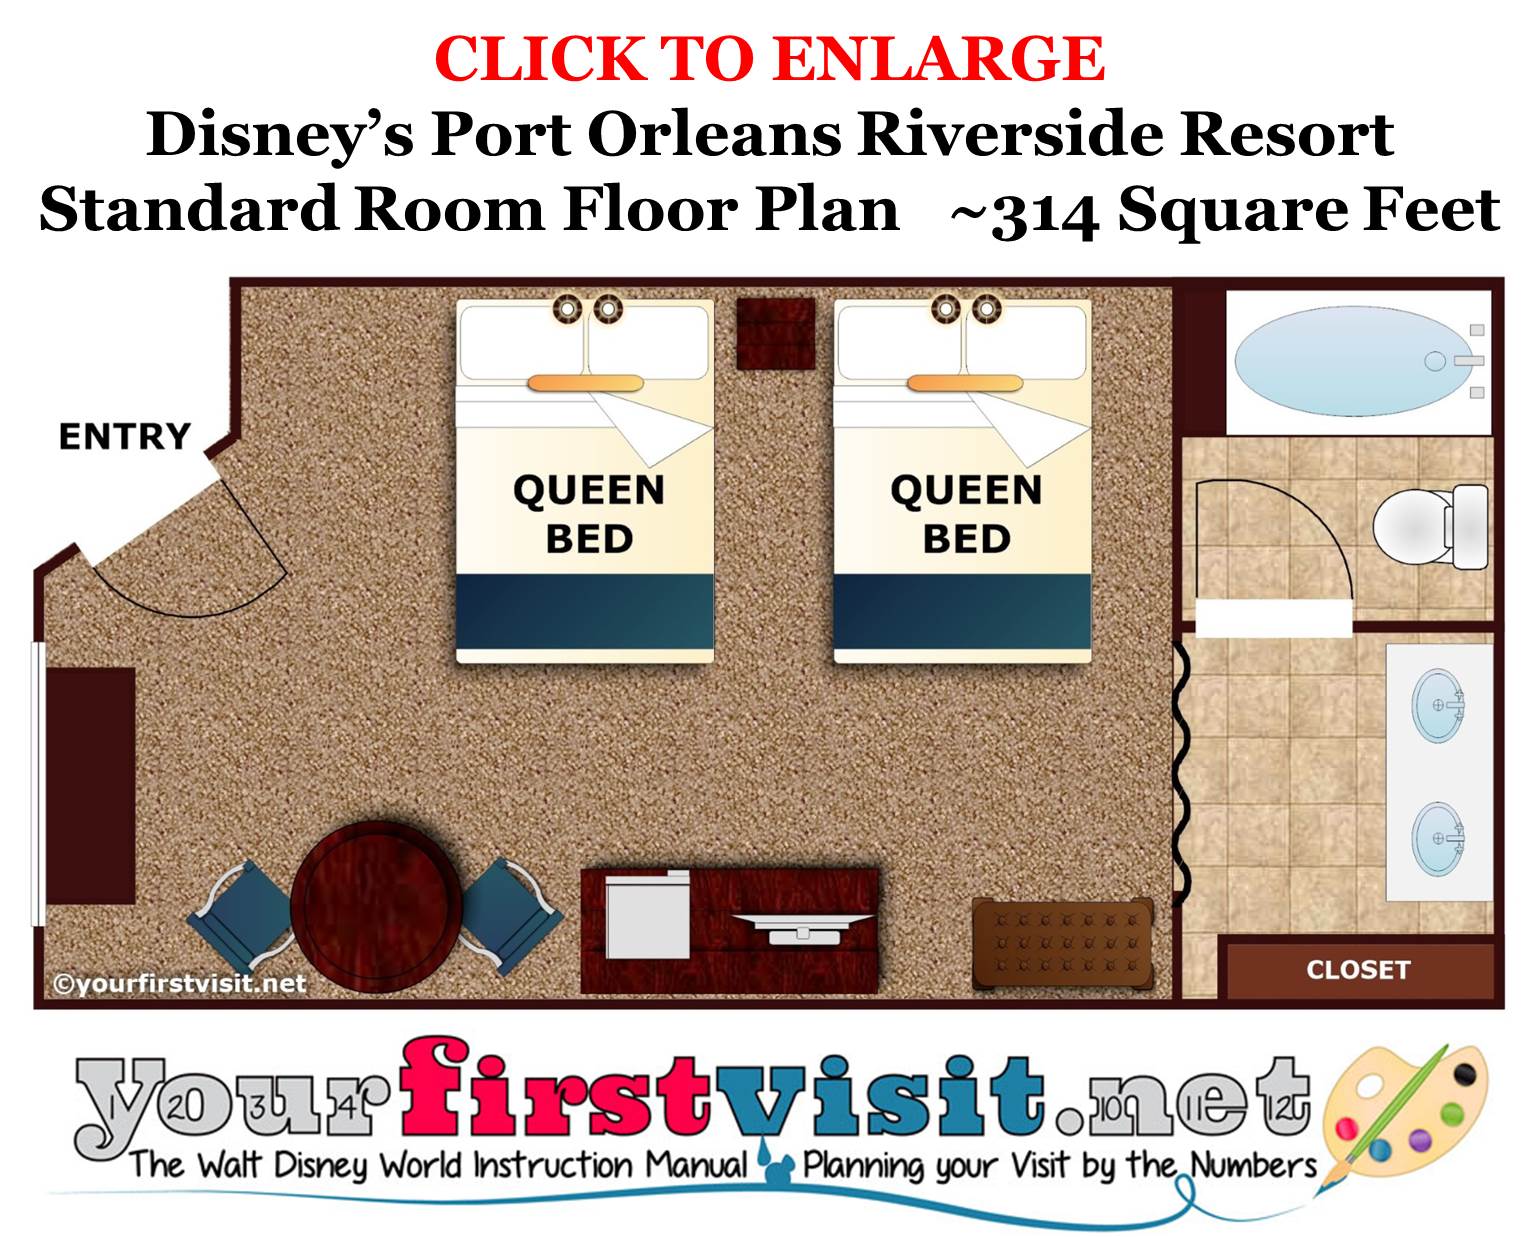 Floor Plan Standard Room Disney's Port Orleans Riverside Resort from yourfirstvisit.net